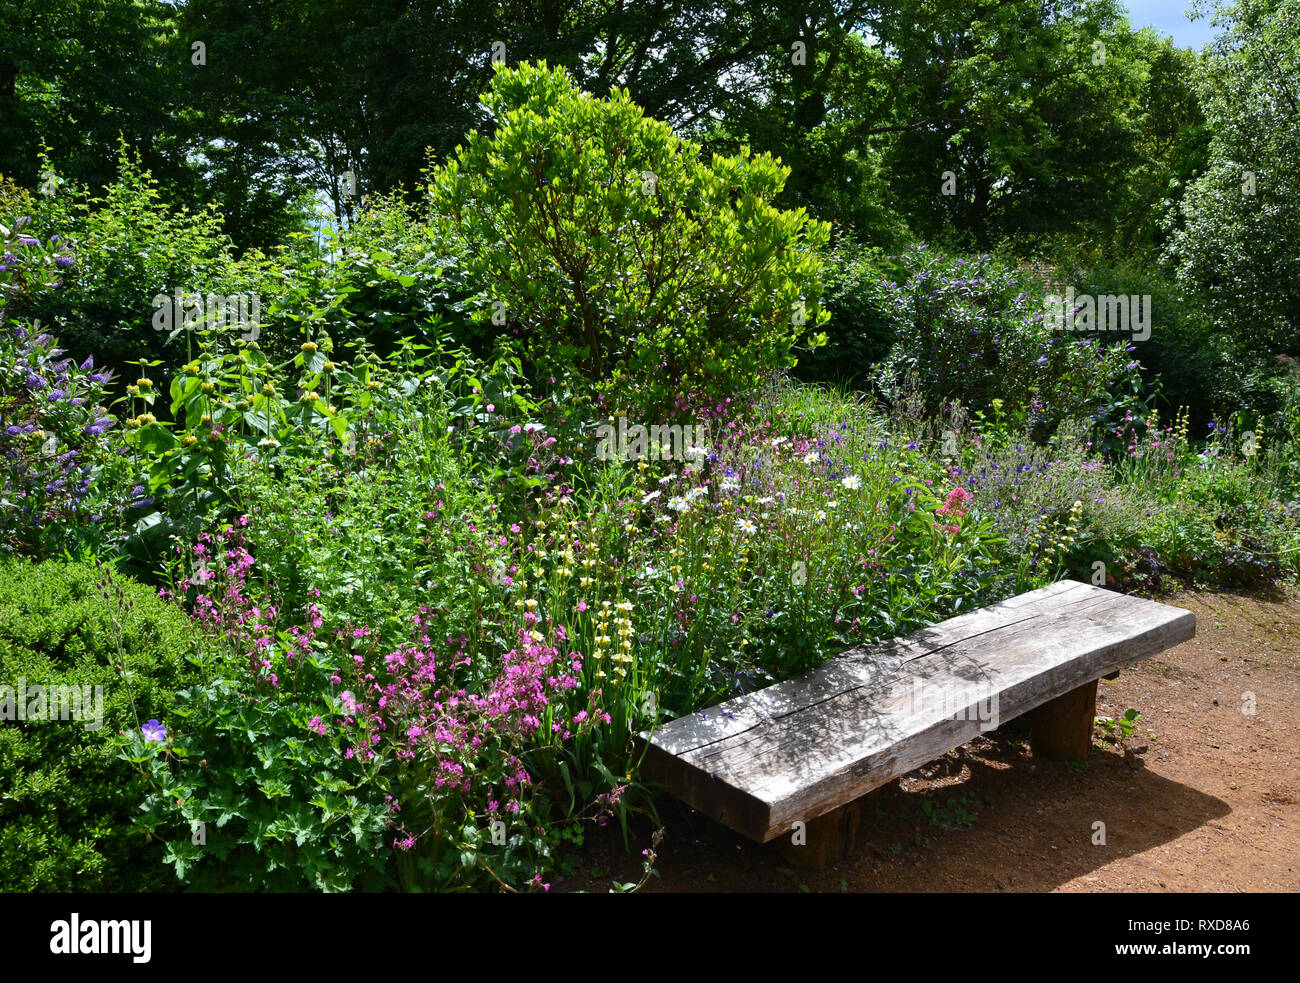 RSPB Garden, designed for Wildlife, at Flatford, Suffolk, UK Stock Photo